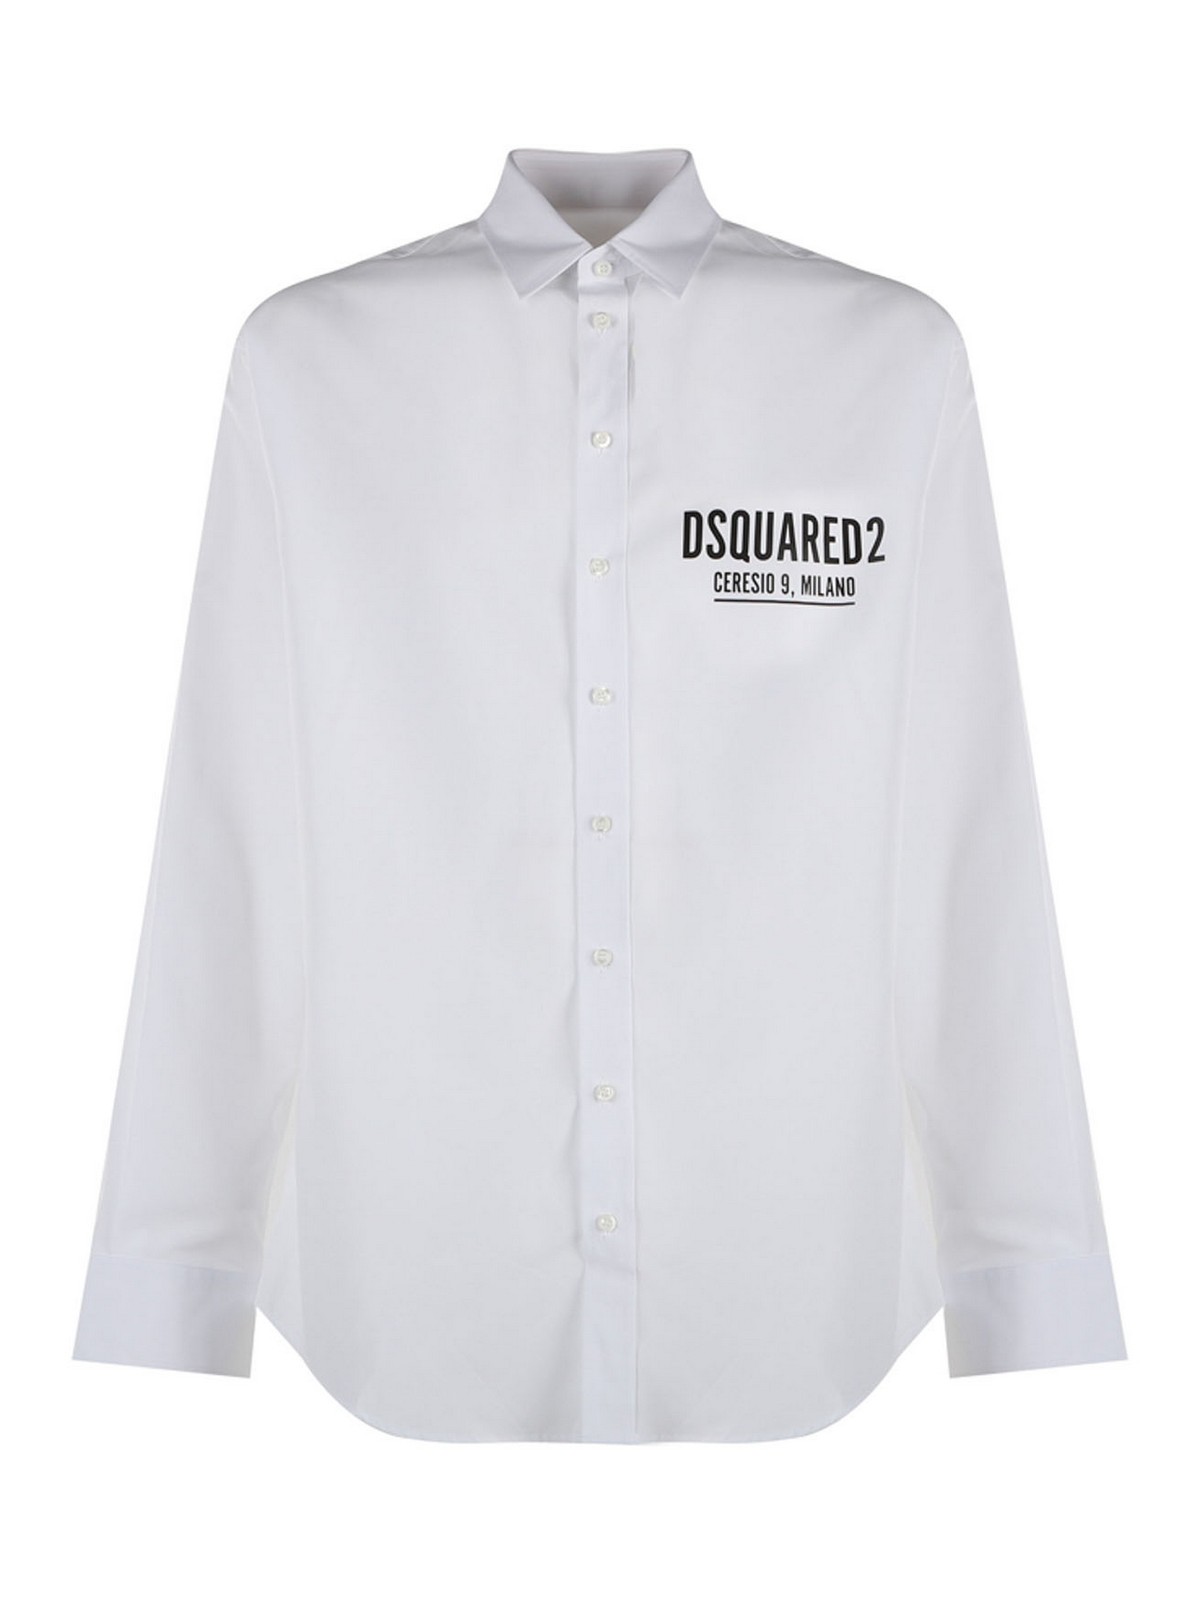 Dsquared2 Shirt  Ceresio9in Poplin In White